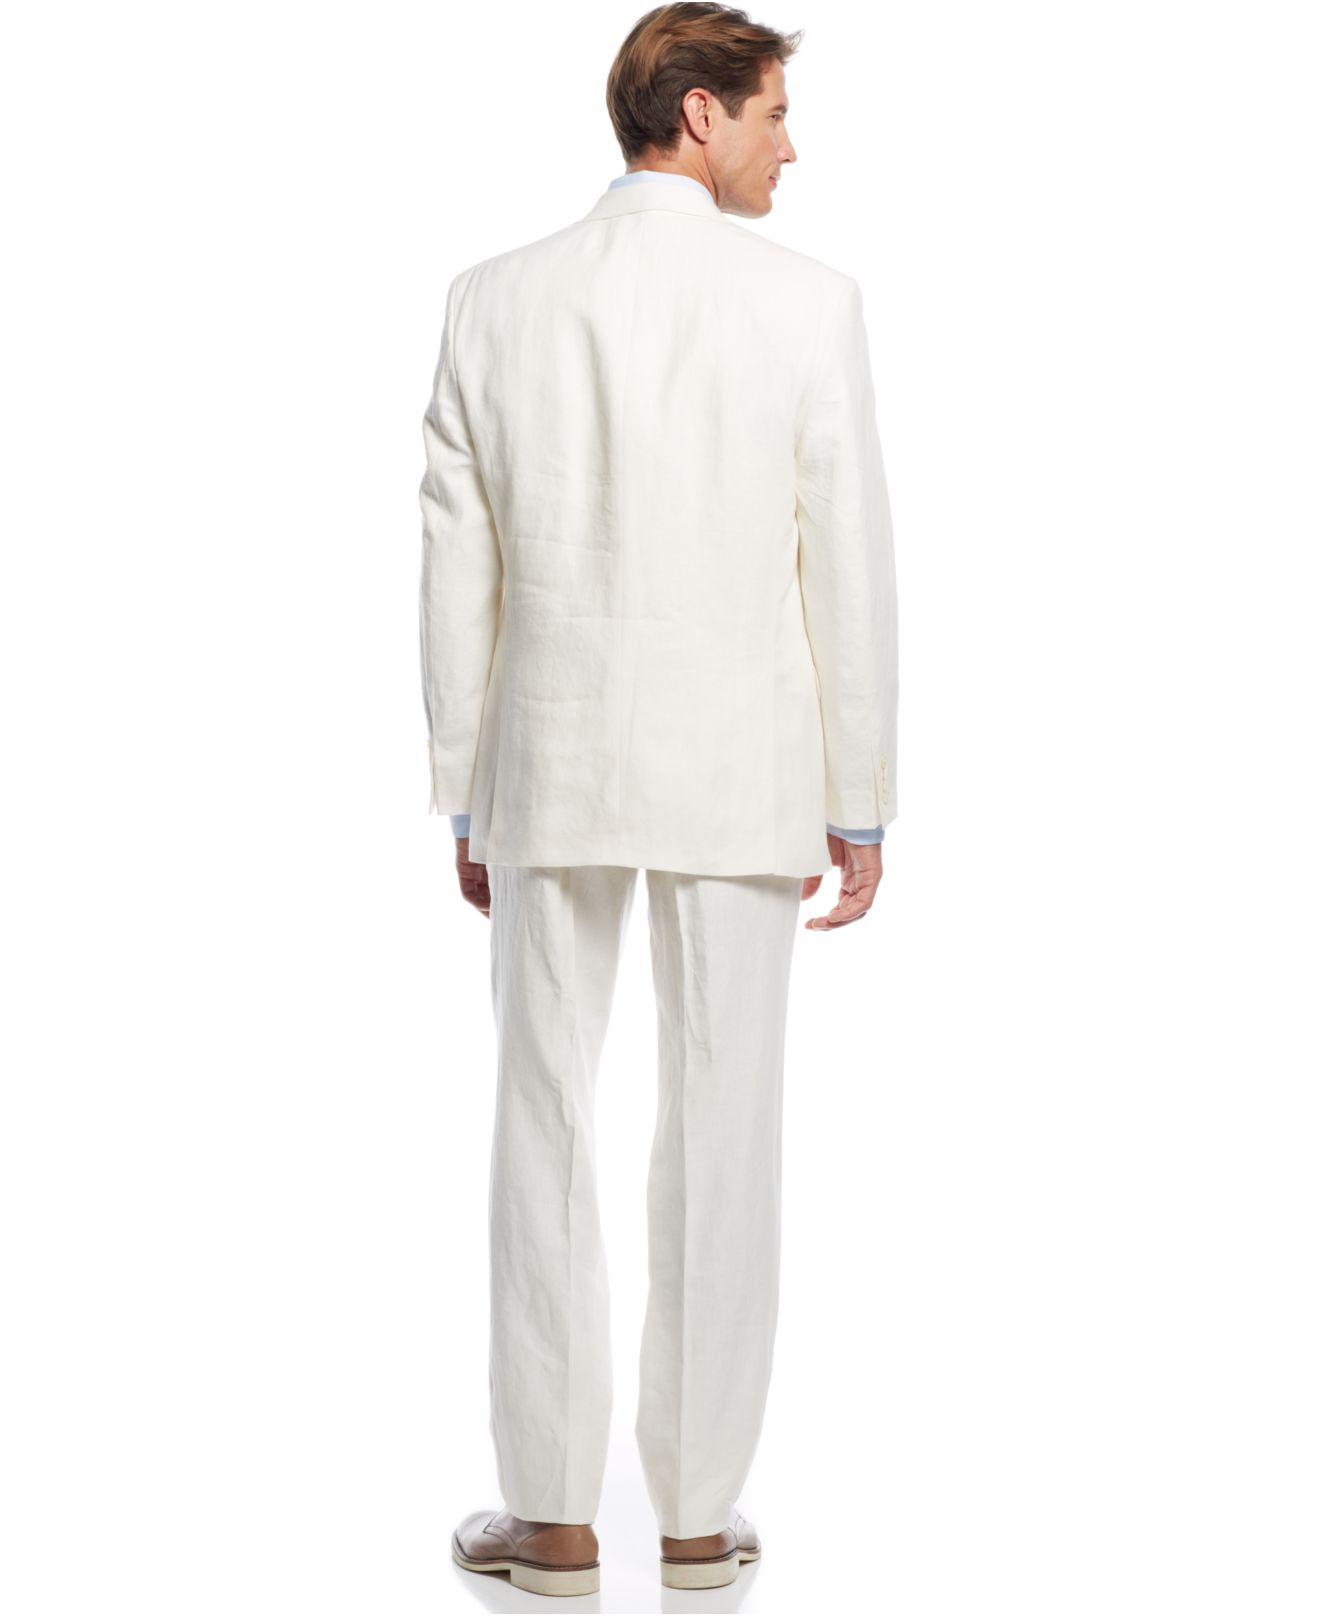 Lyst - Lauren By Ralph Lauren White Linen Vested Suit in White for Men